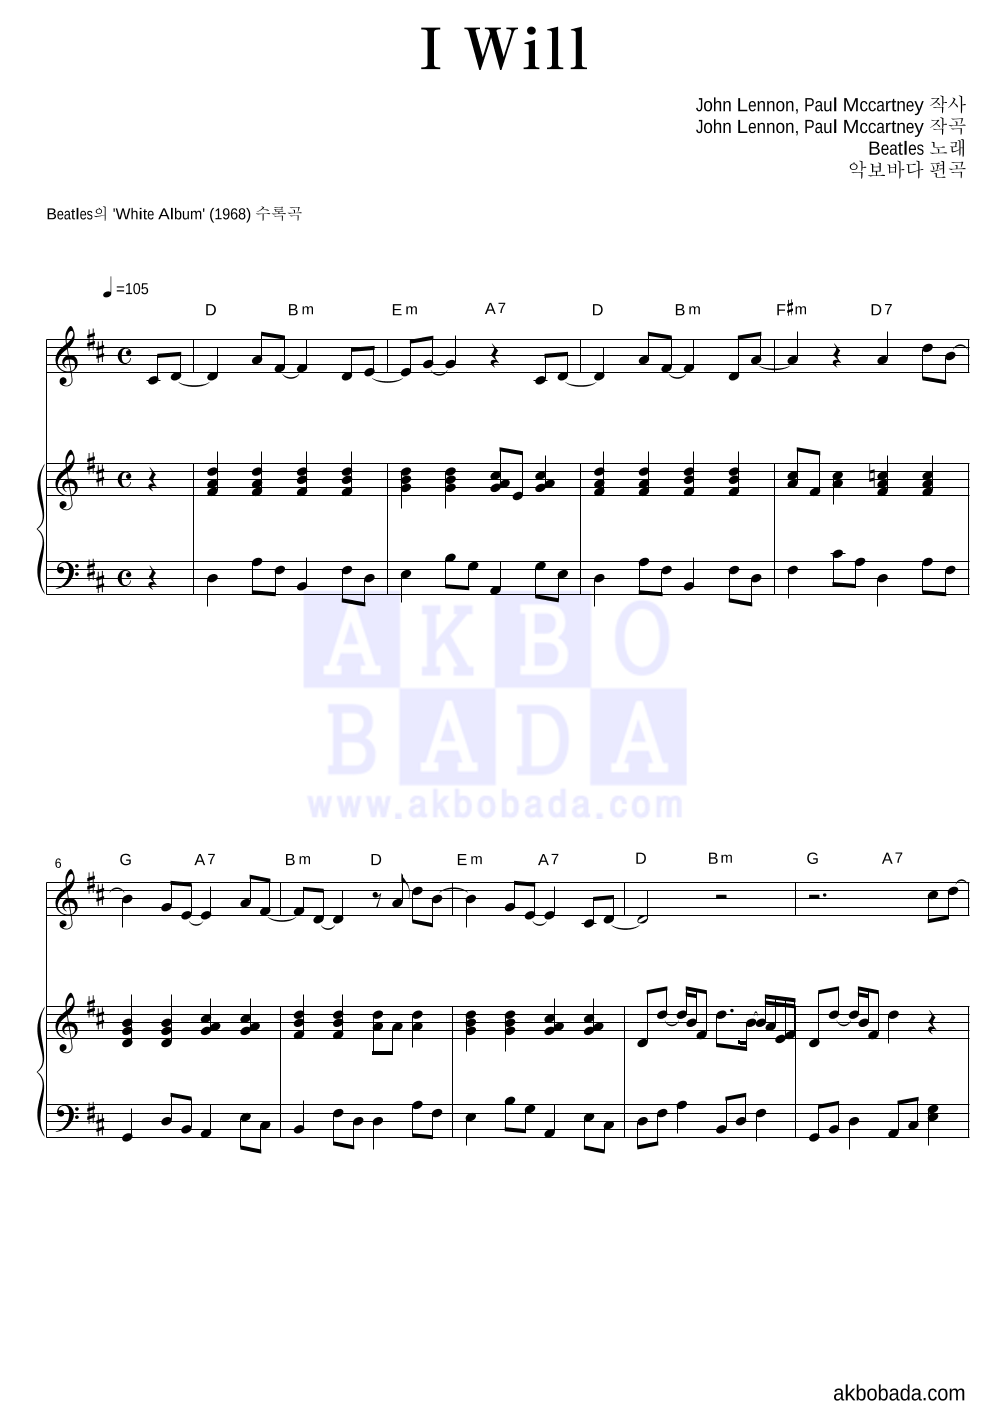 Beatles - I Will 리코더&피아노 악보 